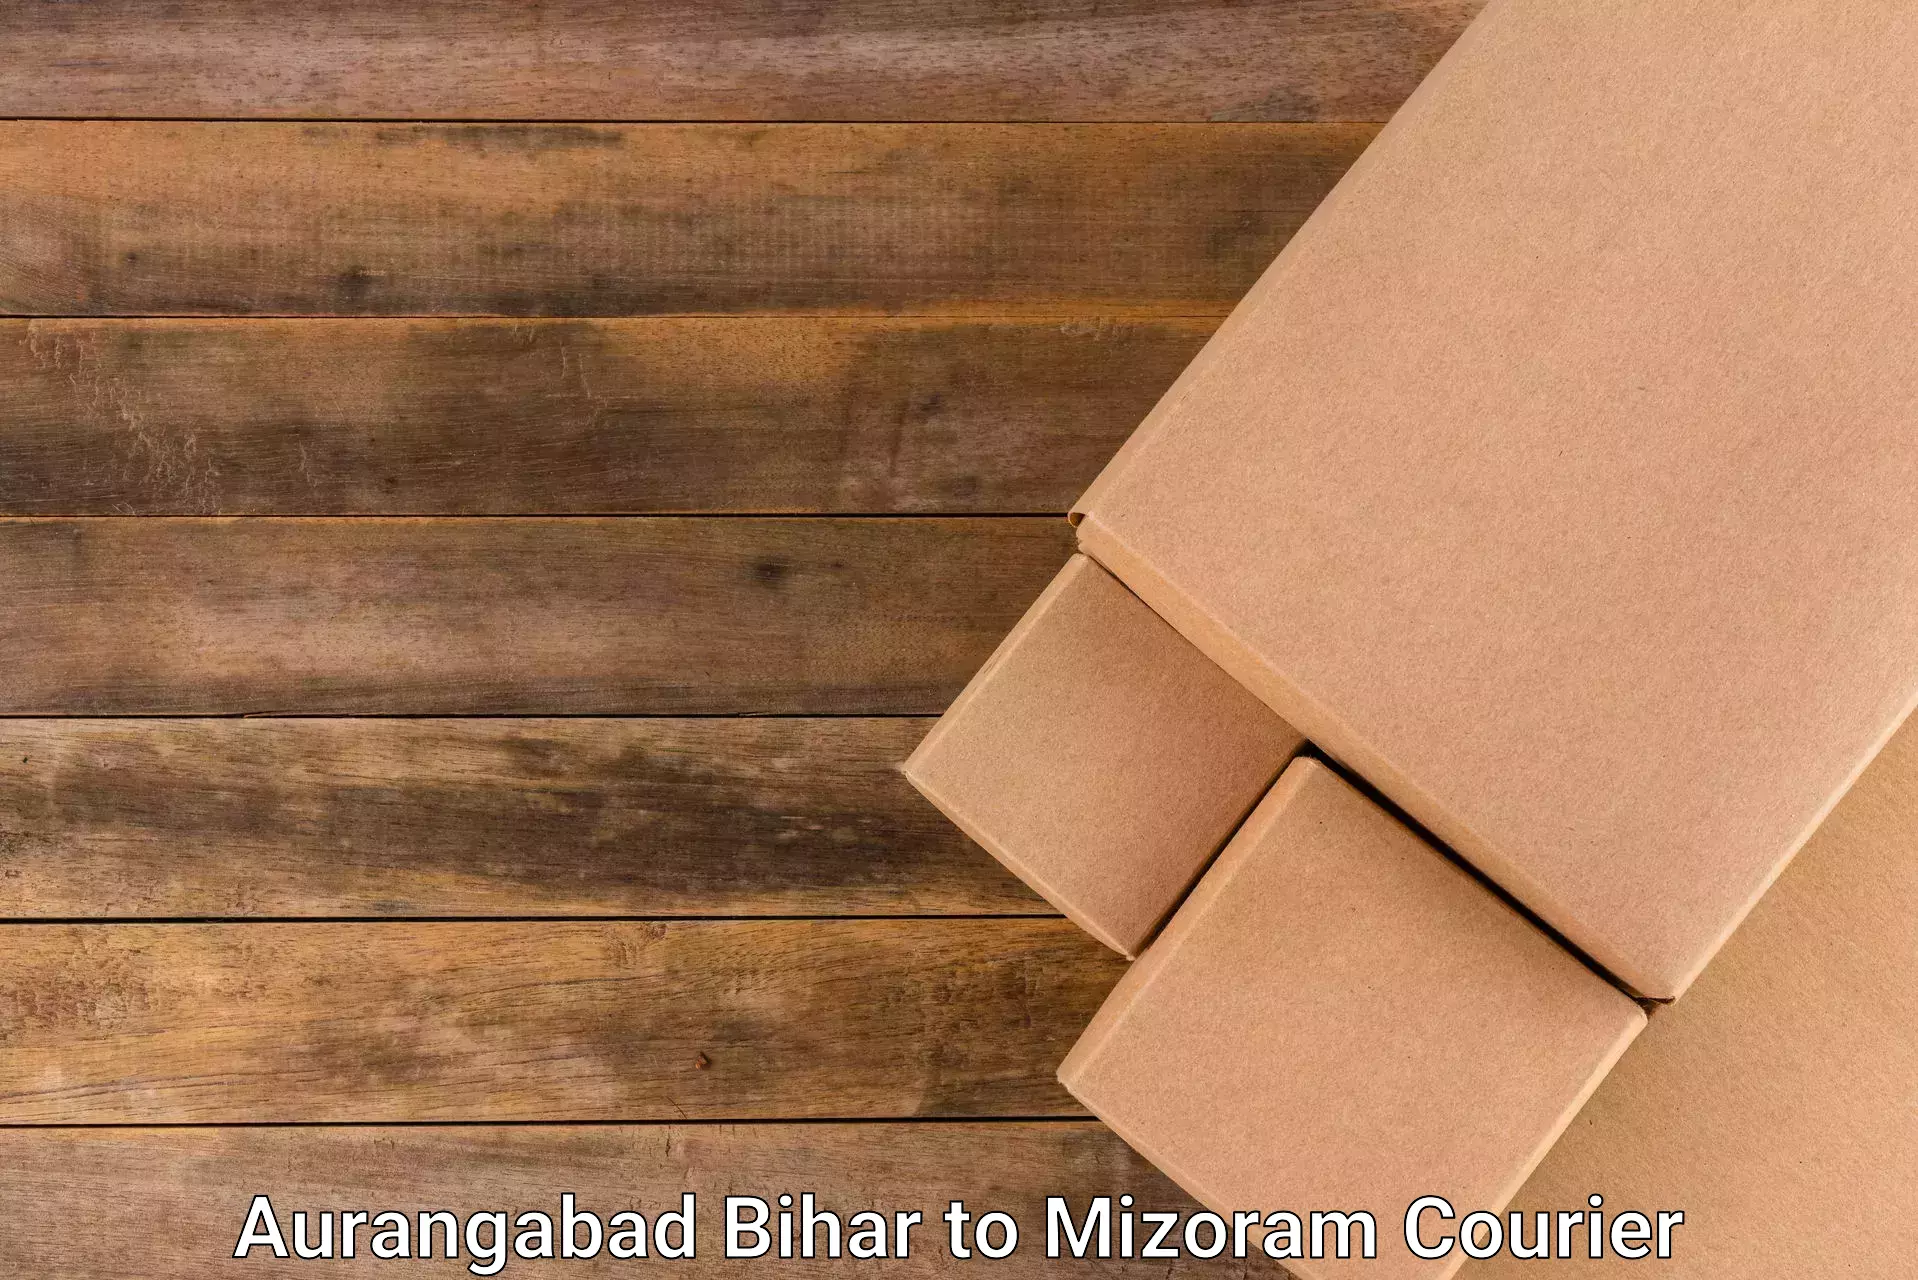 Optimized delivery routes in Aurangabad Bihar to Mizoram